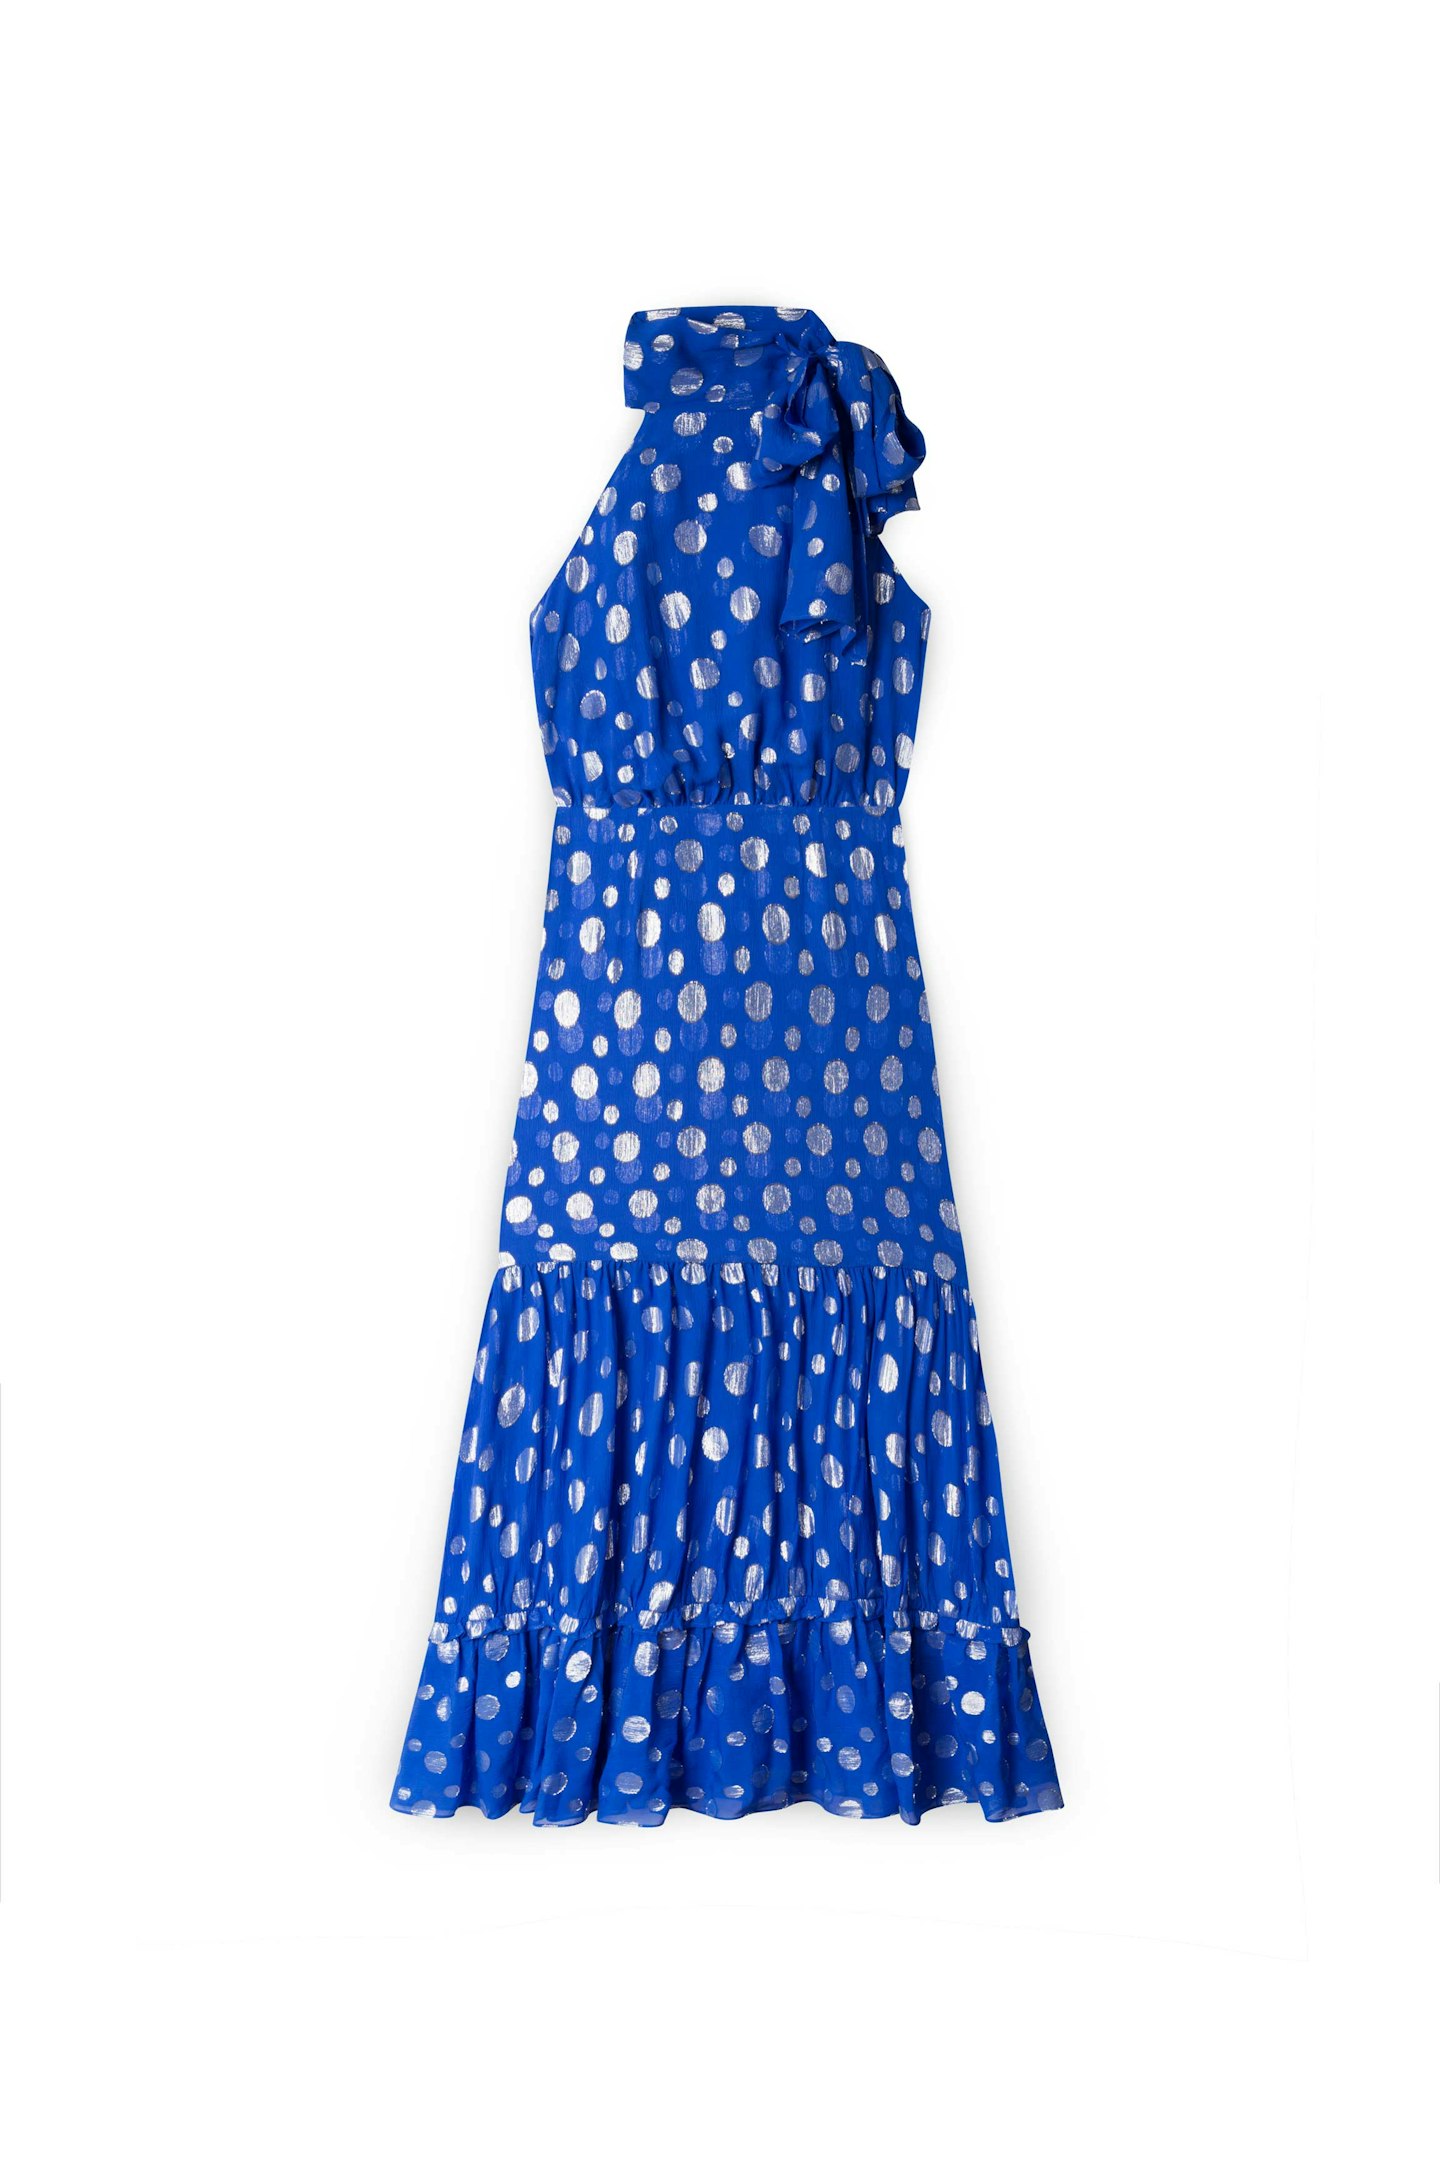 Rixo, Eleanor Lame Spot Halterneck Dress, £305